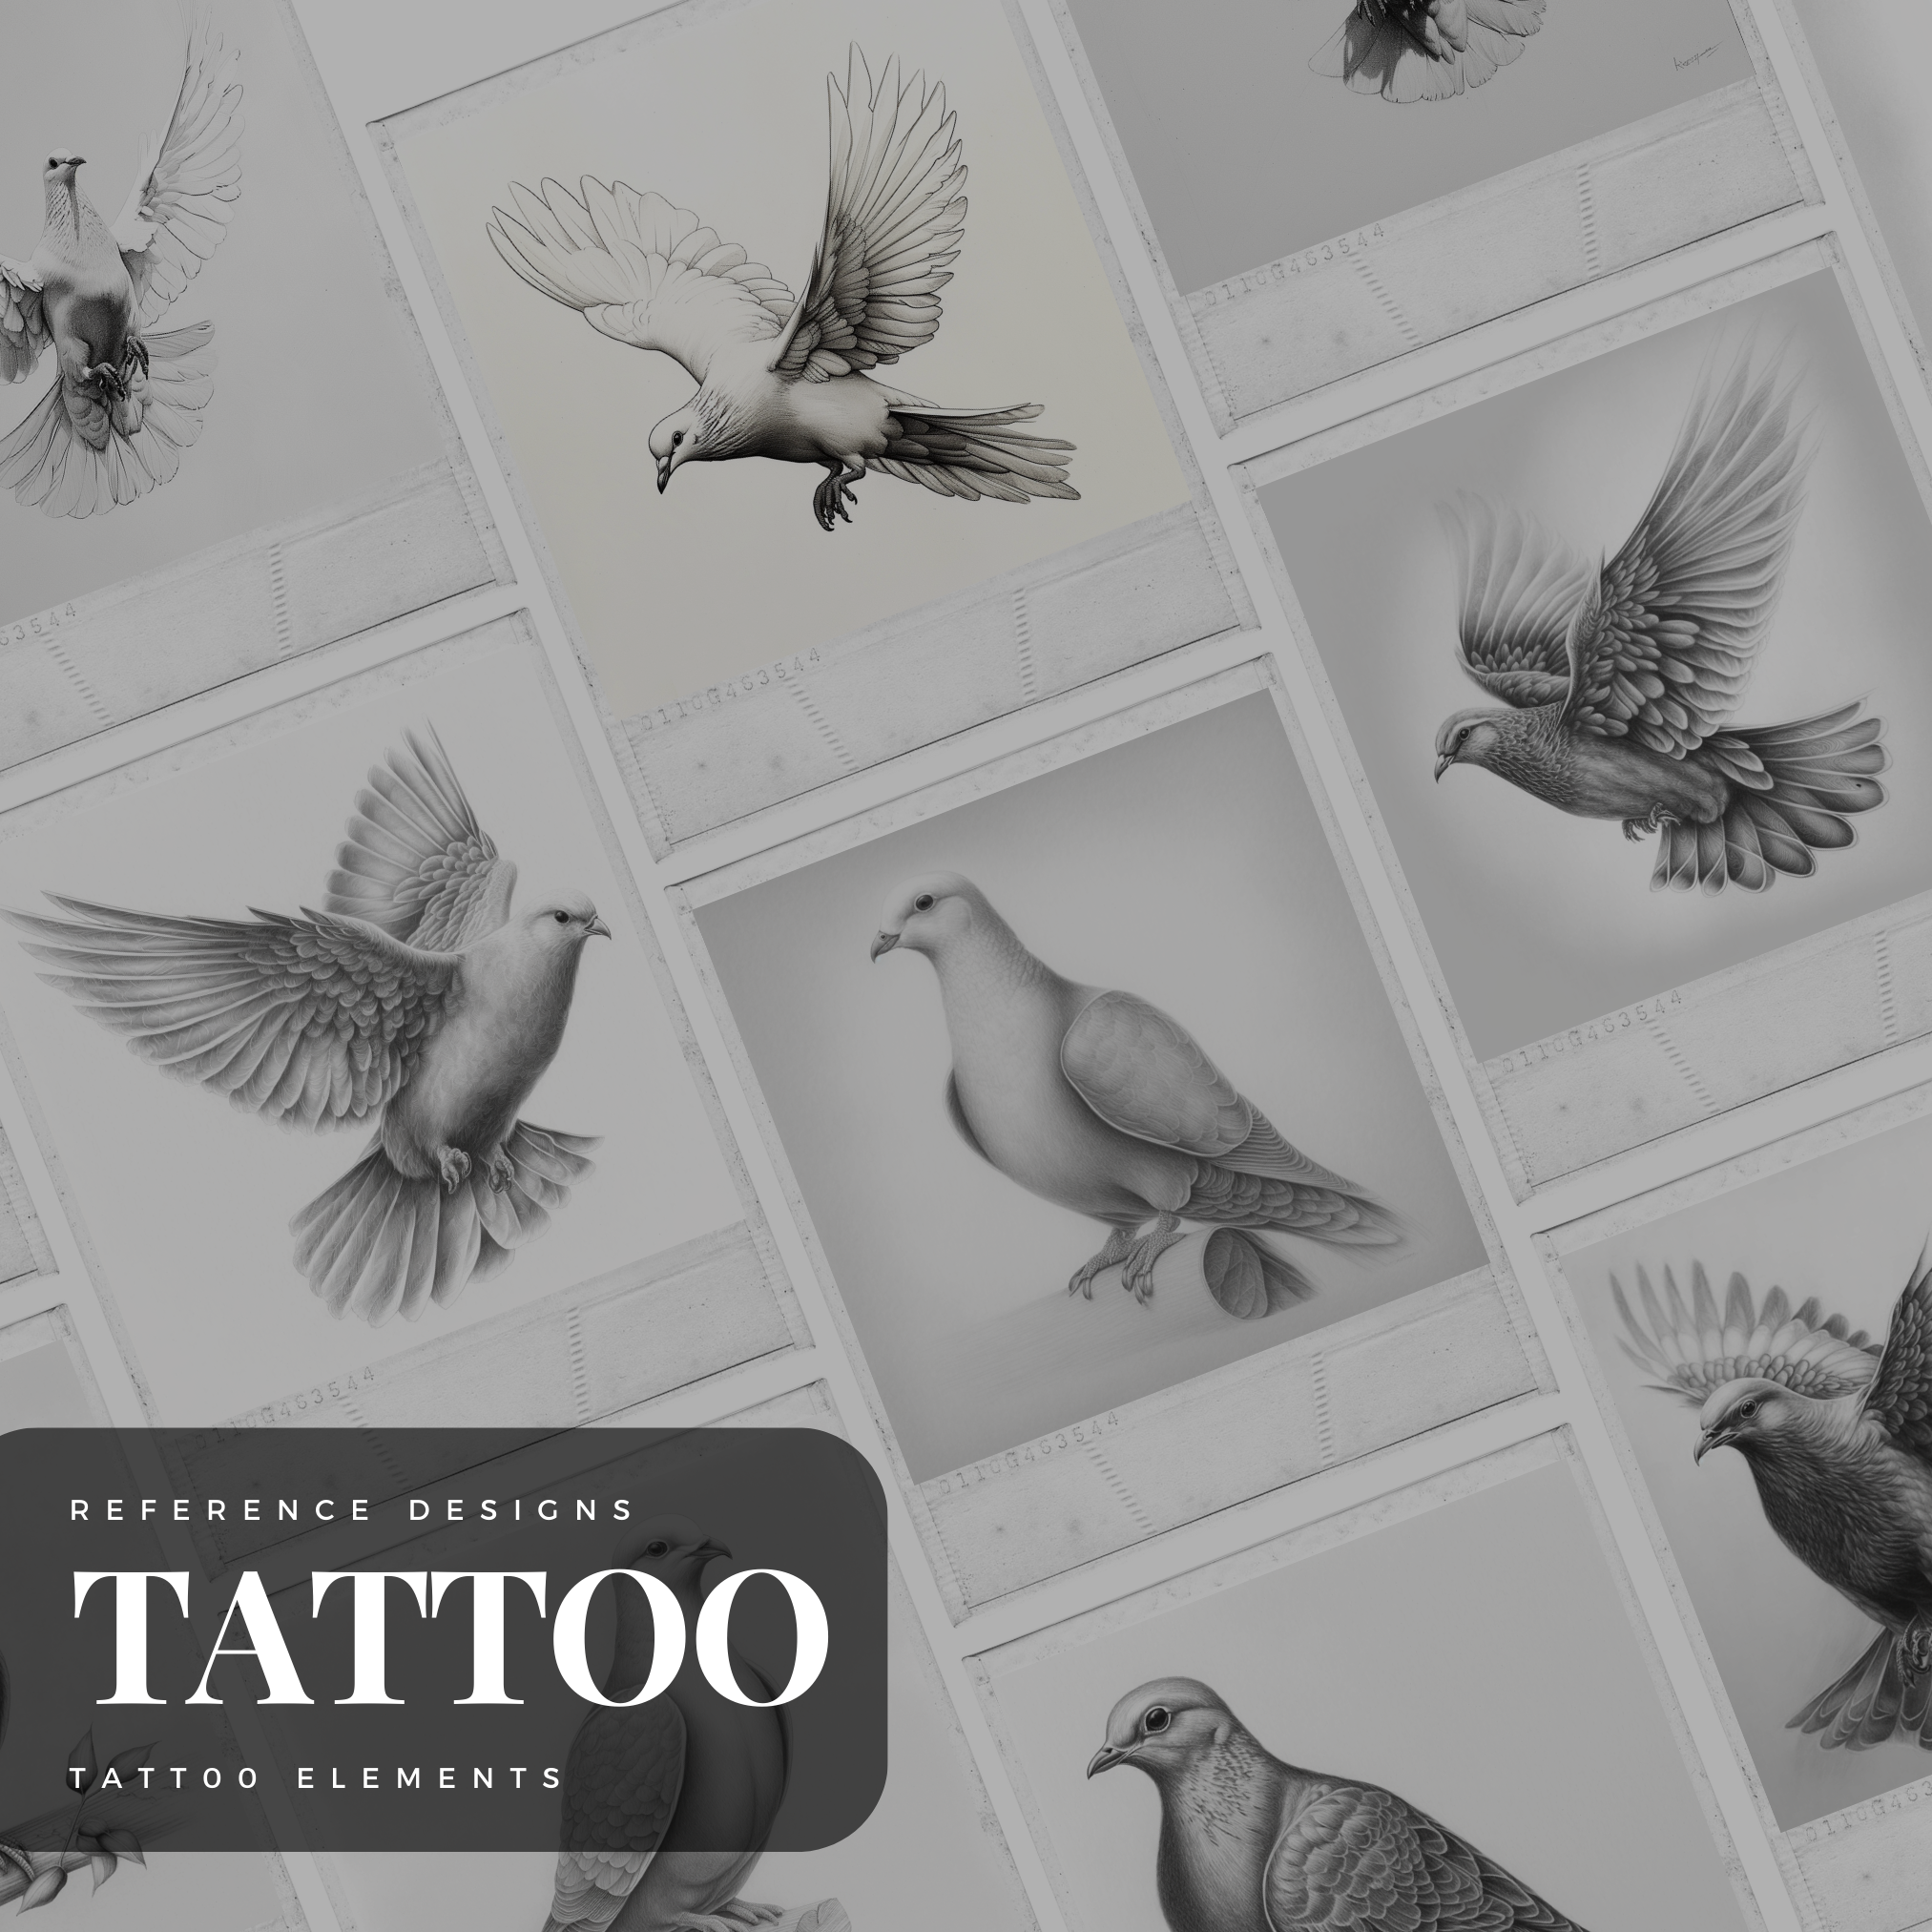 Diamonds Digital Tattoo Element Design Collection: 100 Procreate & Sketchbook Images